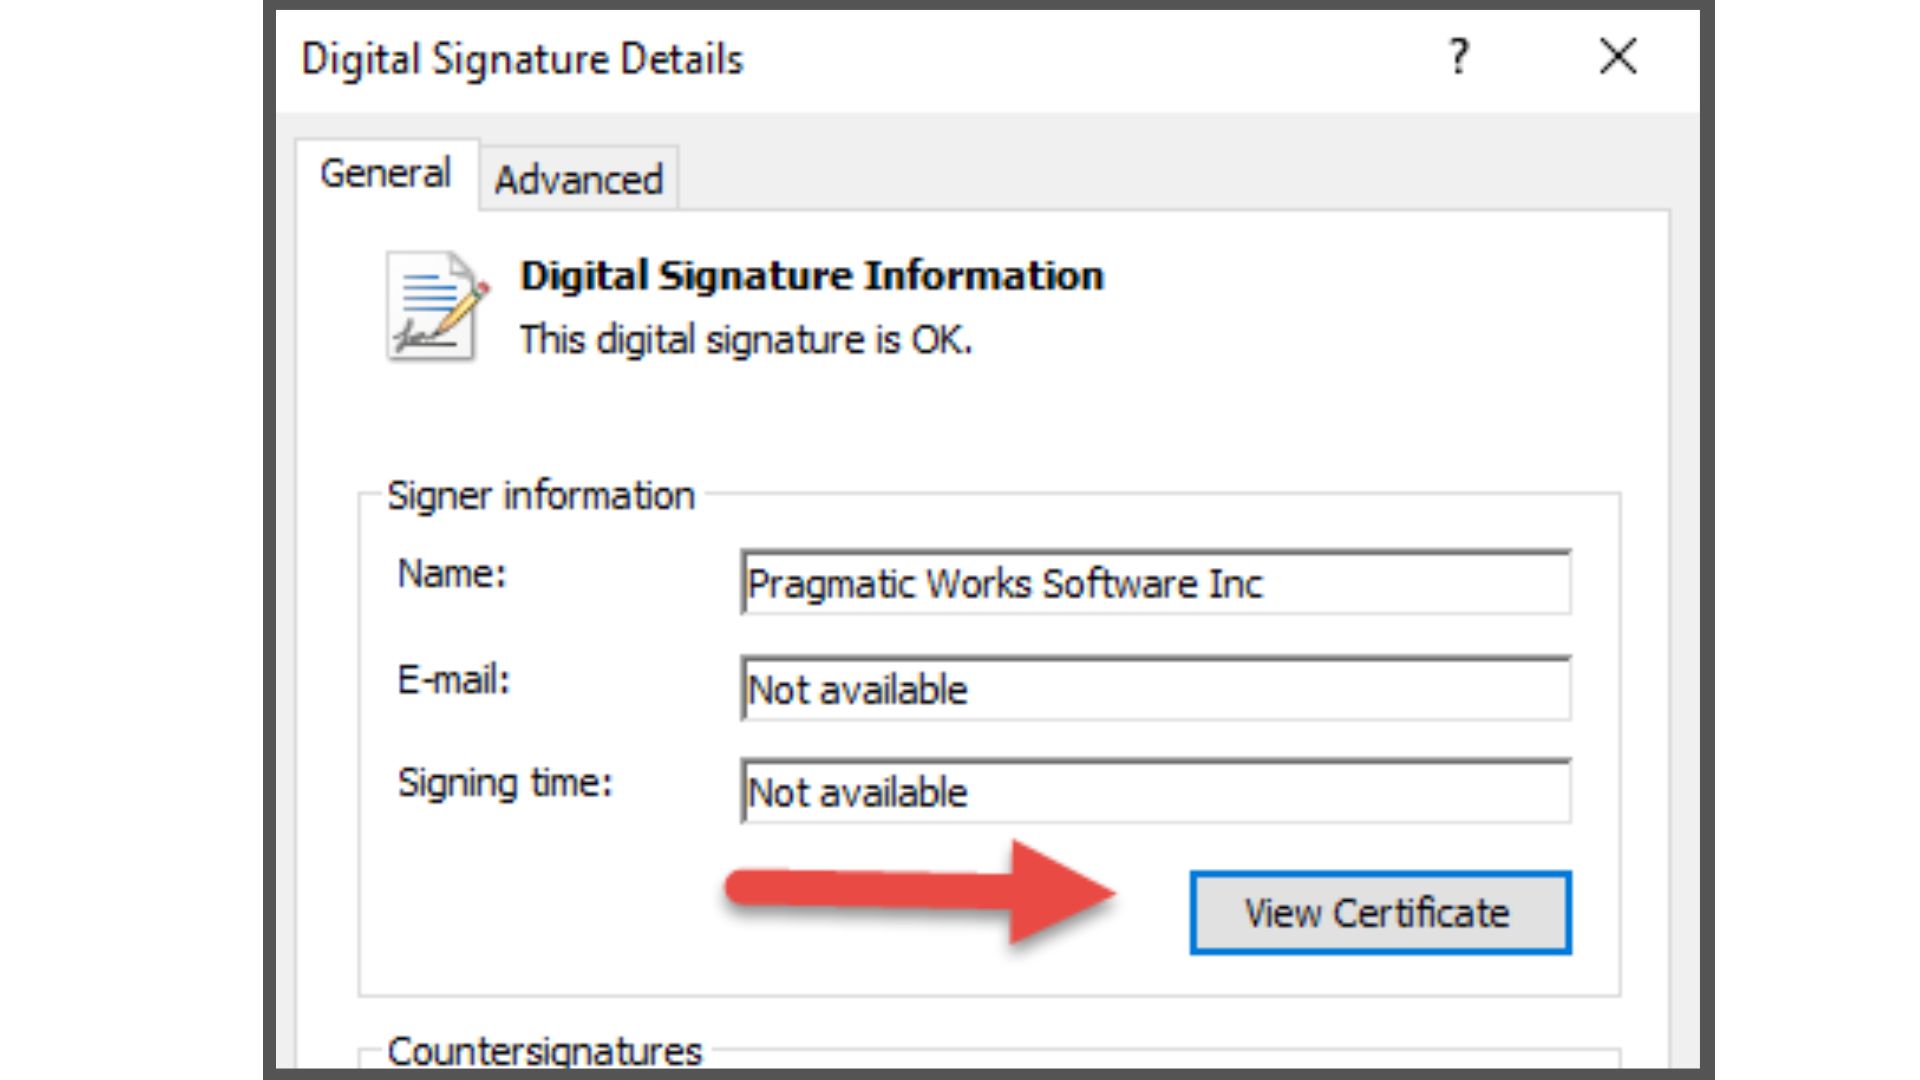 Install the Digital Signature Certificate 